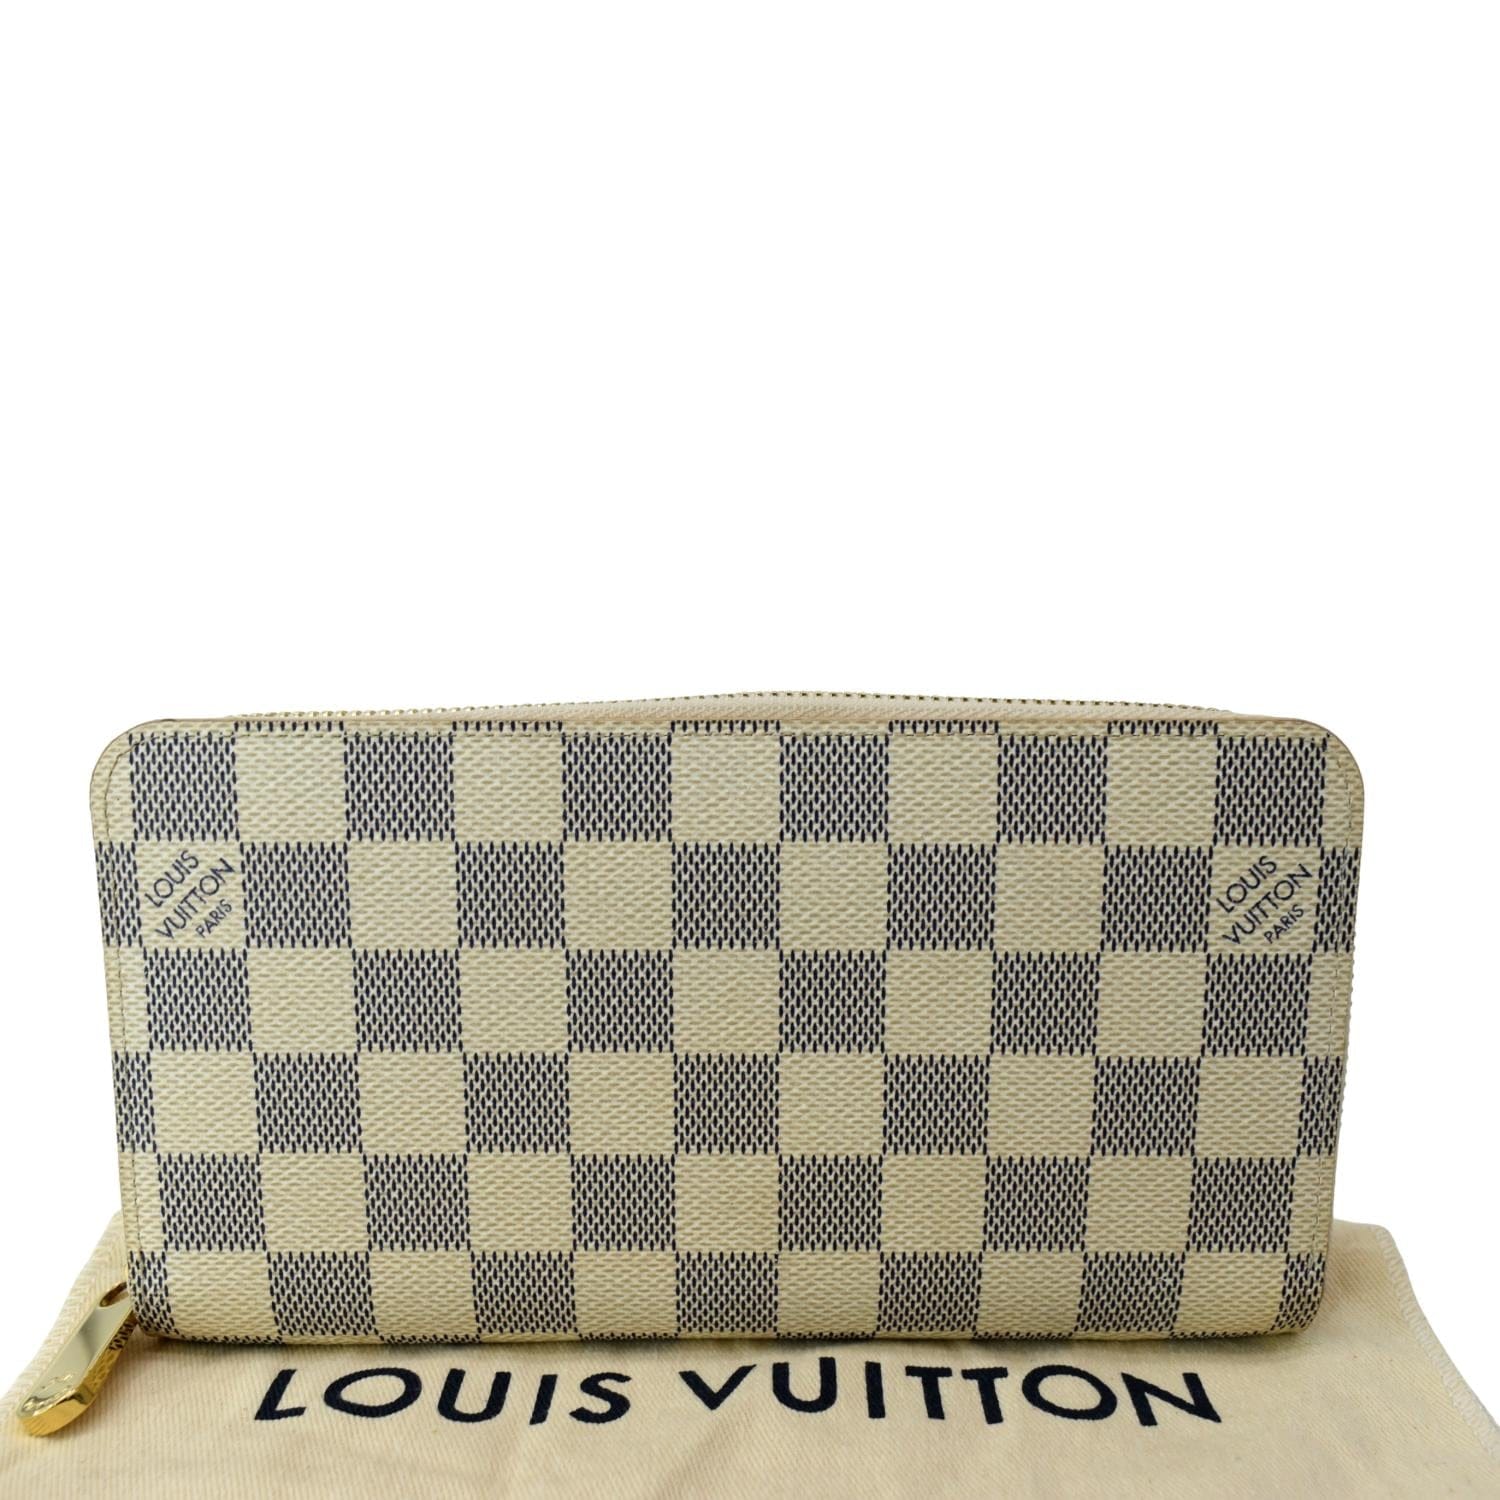 Louis Vuitton Wallet No Date Code for Sale in San Antonio, TX